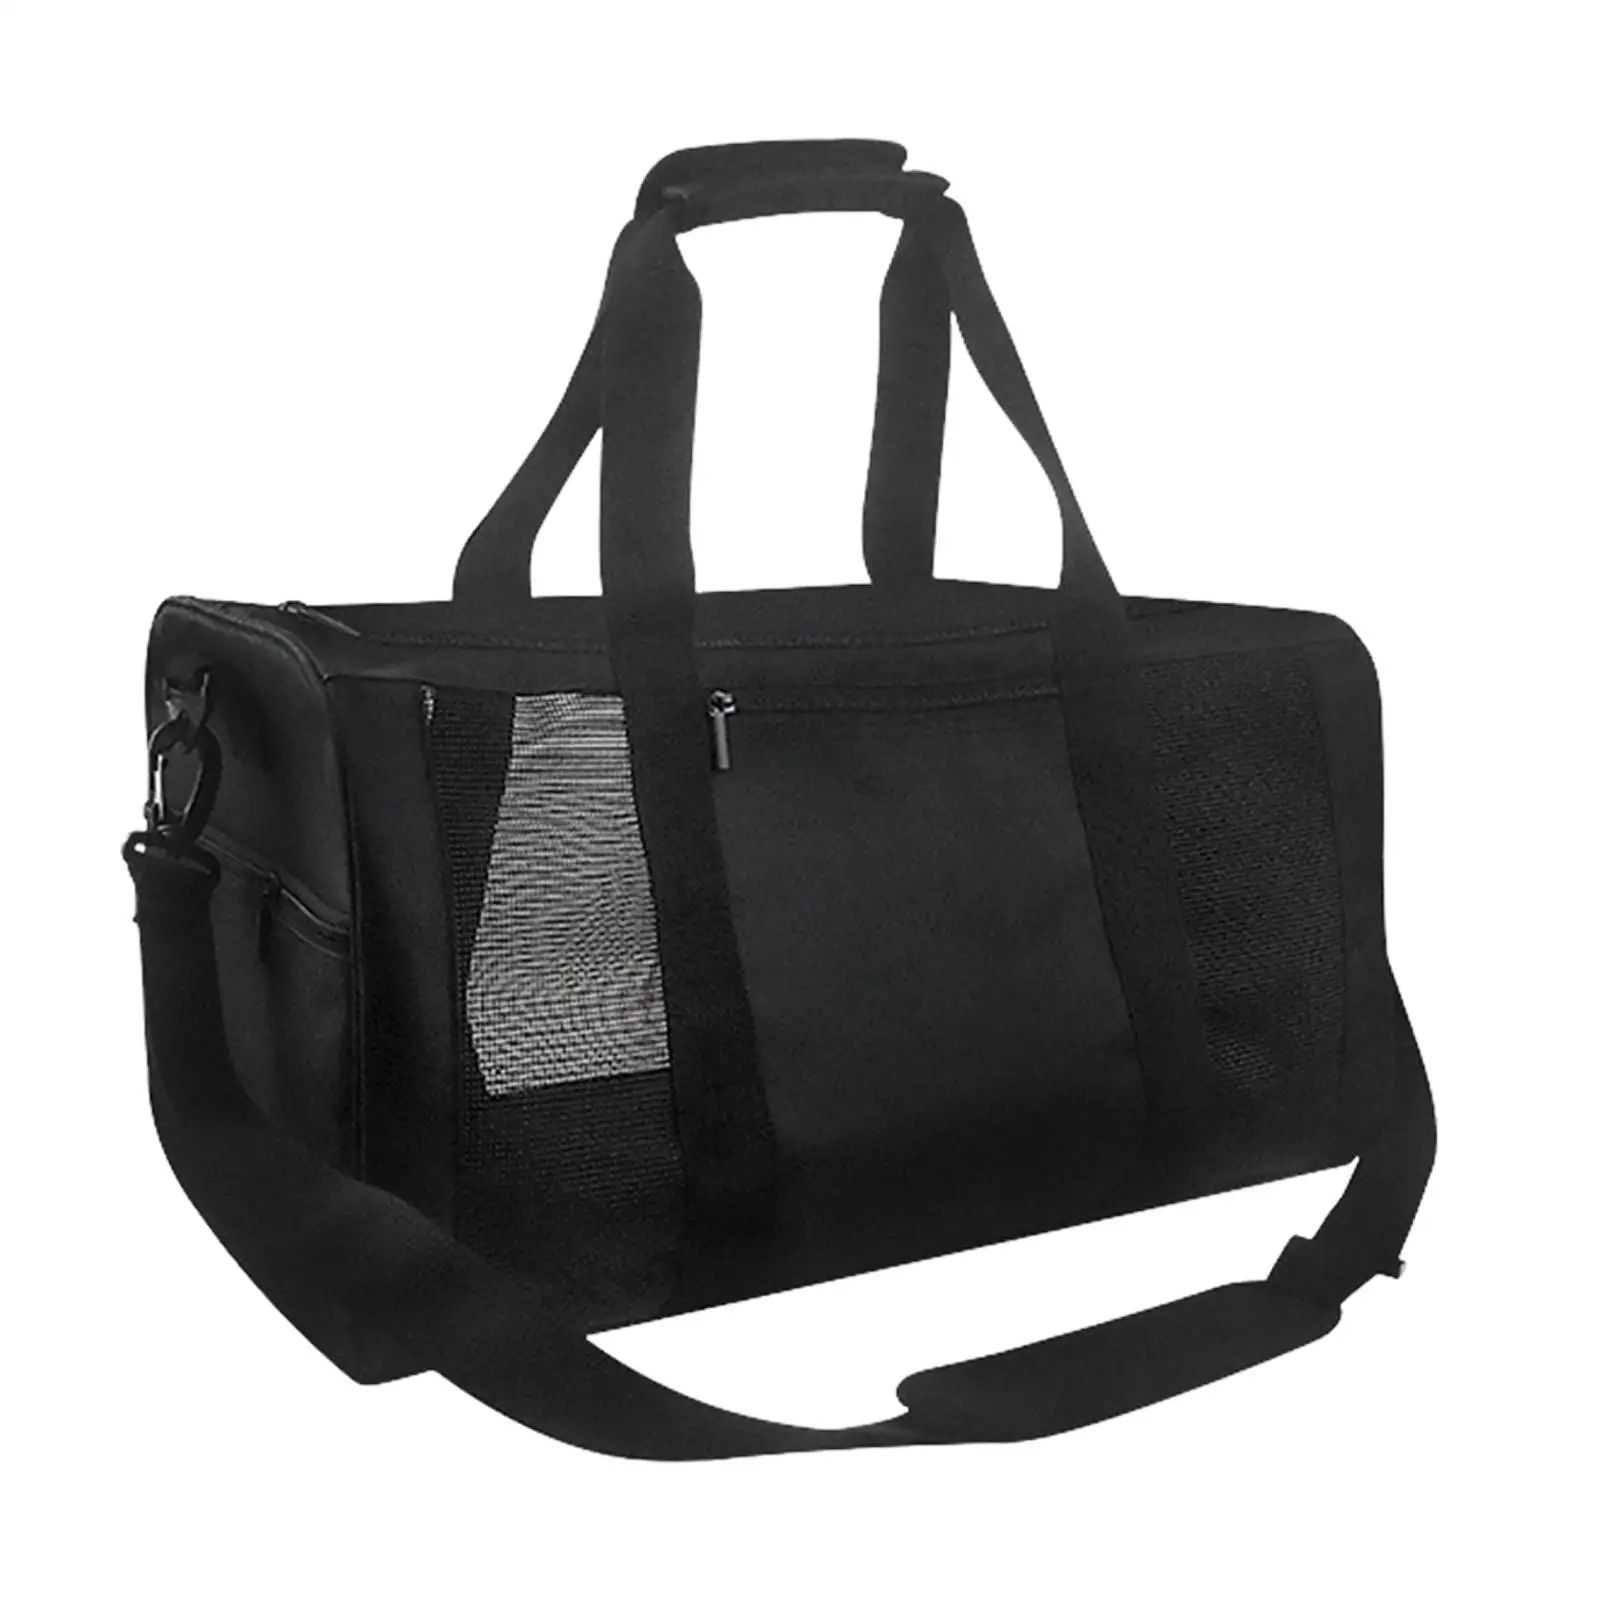 Mesh Gym Bag Workout Hiking Detachable Strap Lightweight Travel Zipper Closure Multifunctional Exercise Bag Gym Mesh Roll Bag